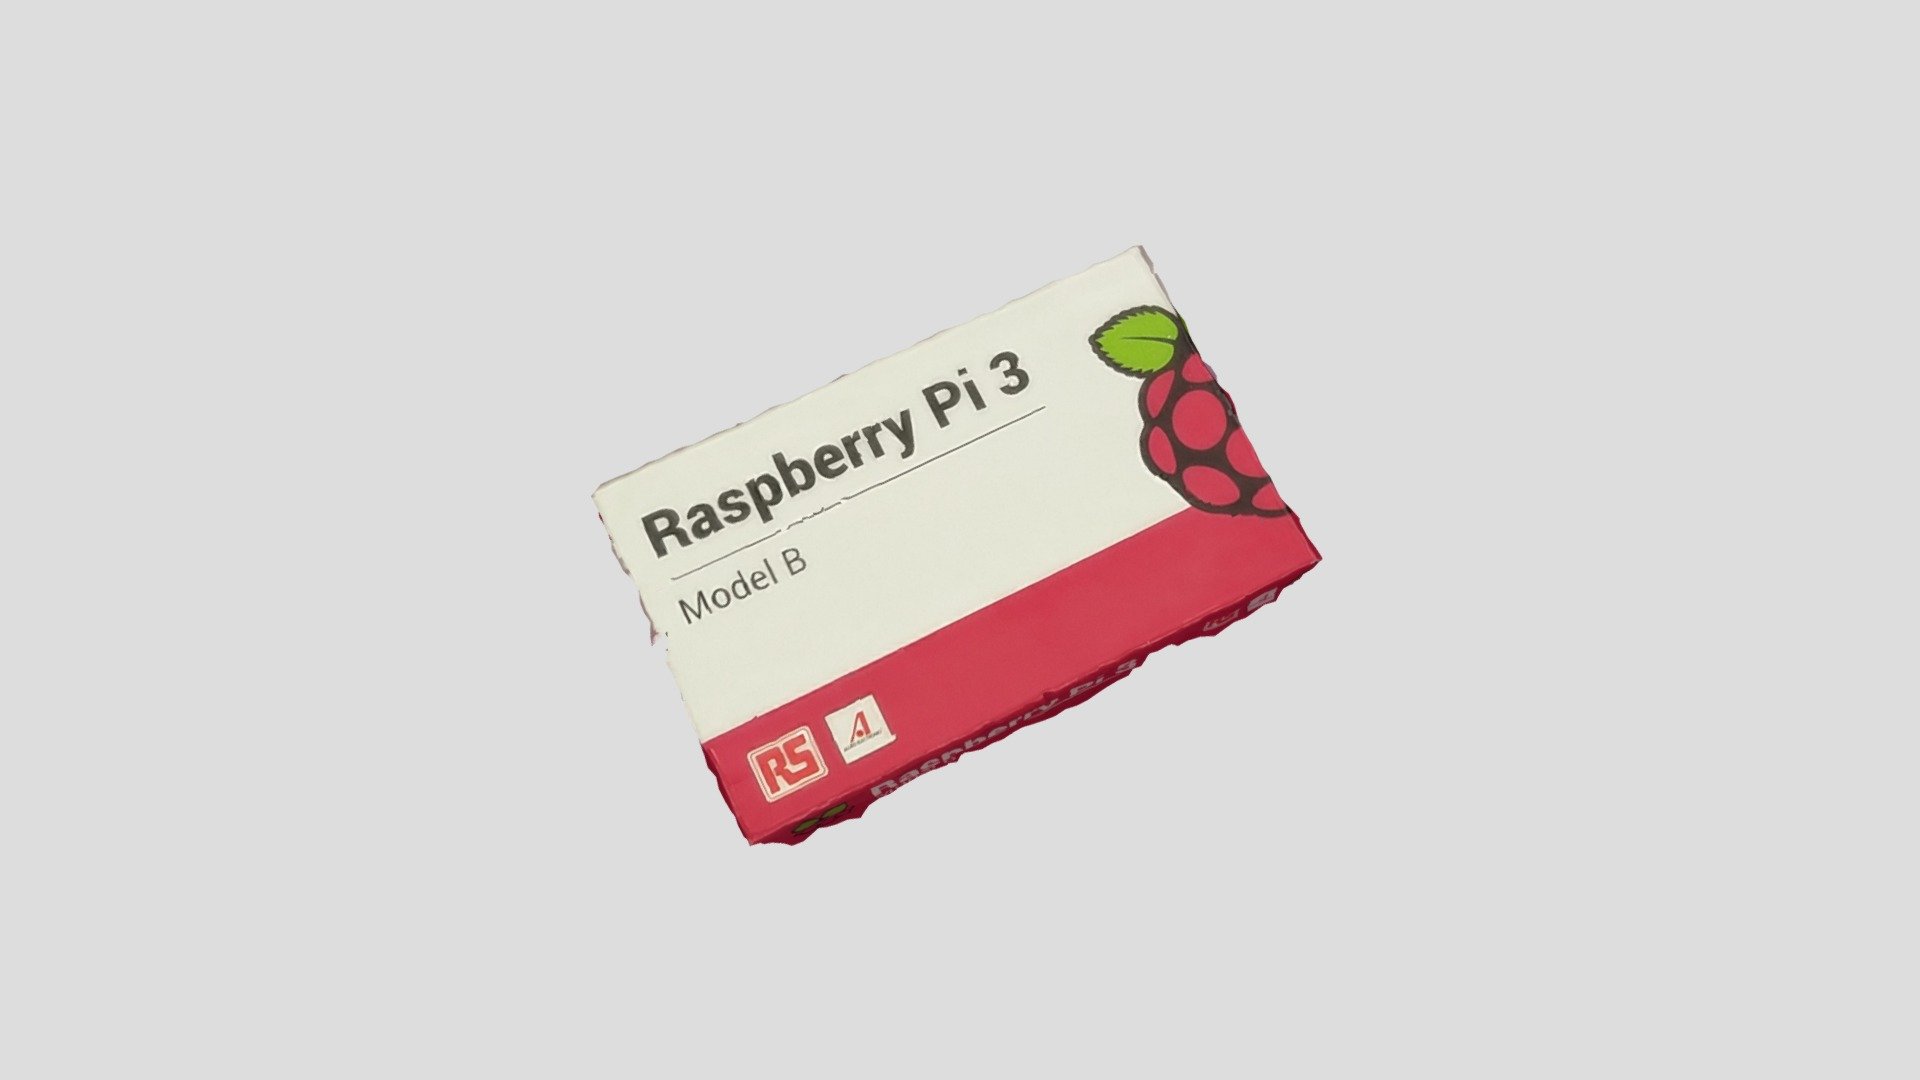 Who stole my Raspberry Pi?